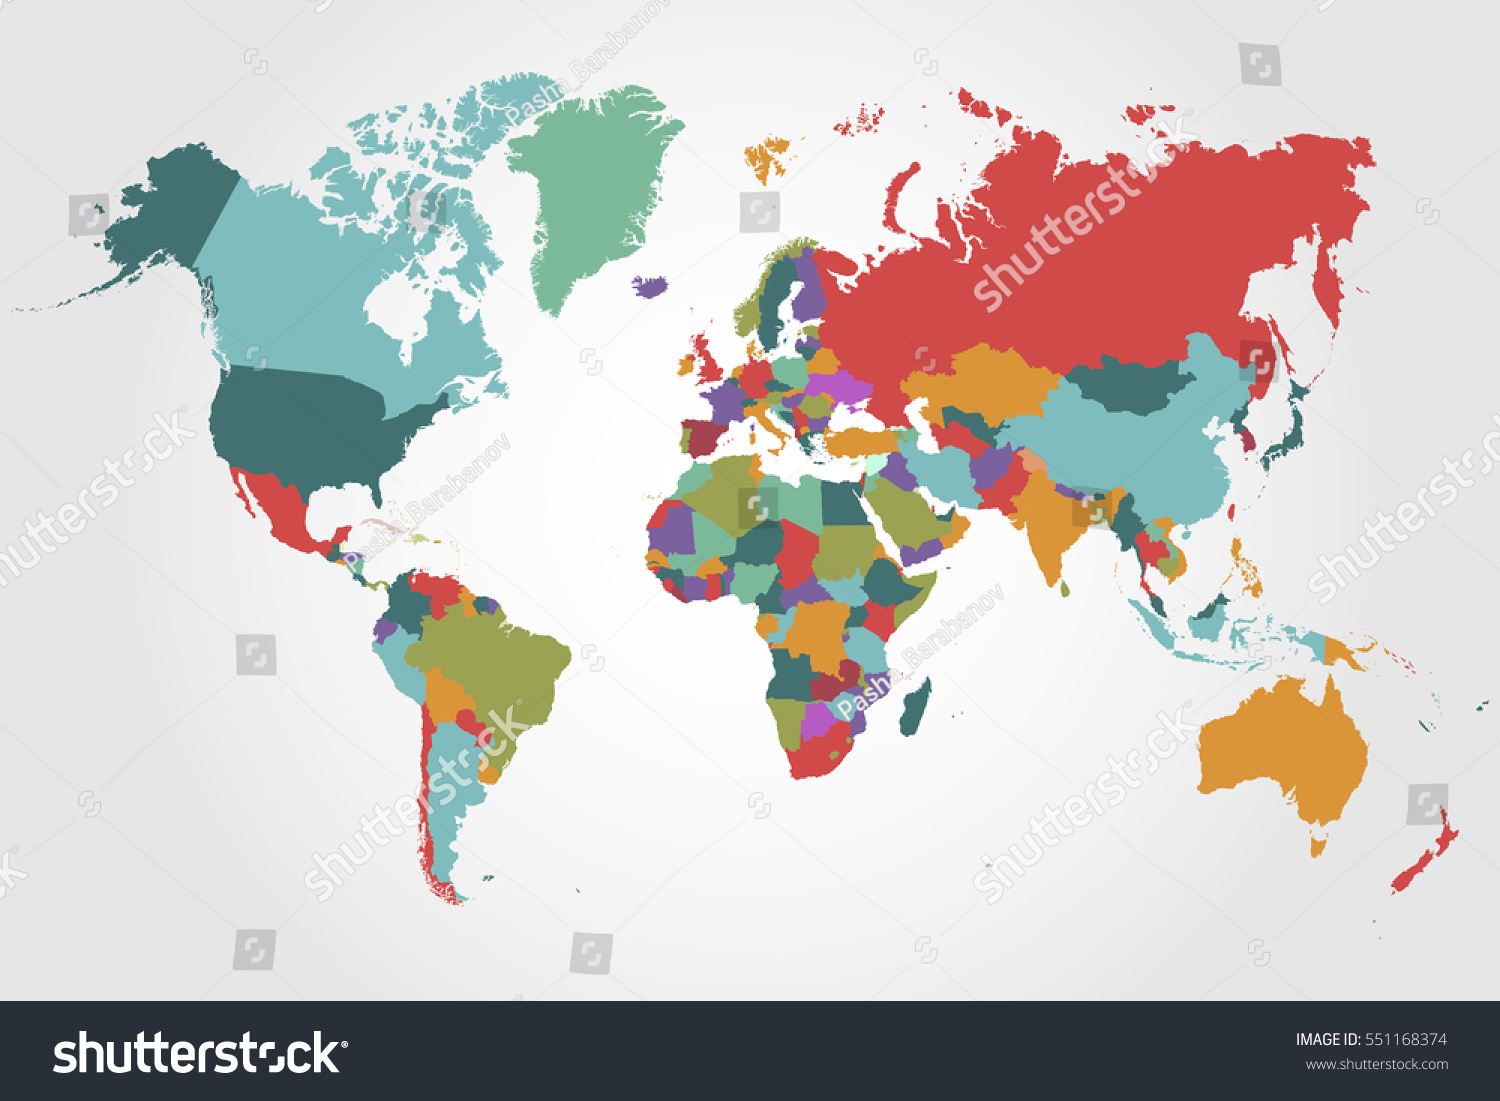 edit vectors free online world map co shutterstock editor